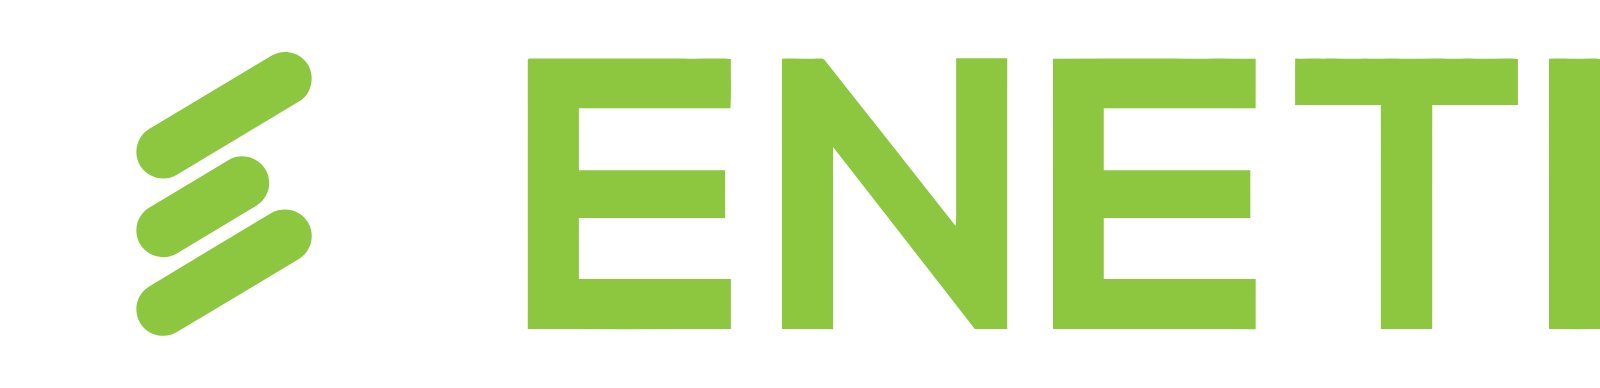 Eneti Logo groß für dunkle Hintergründe (transparentes PNG)